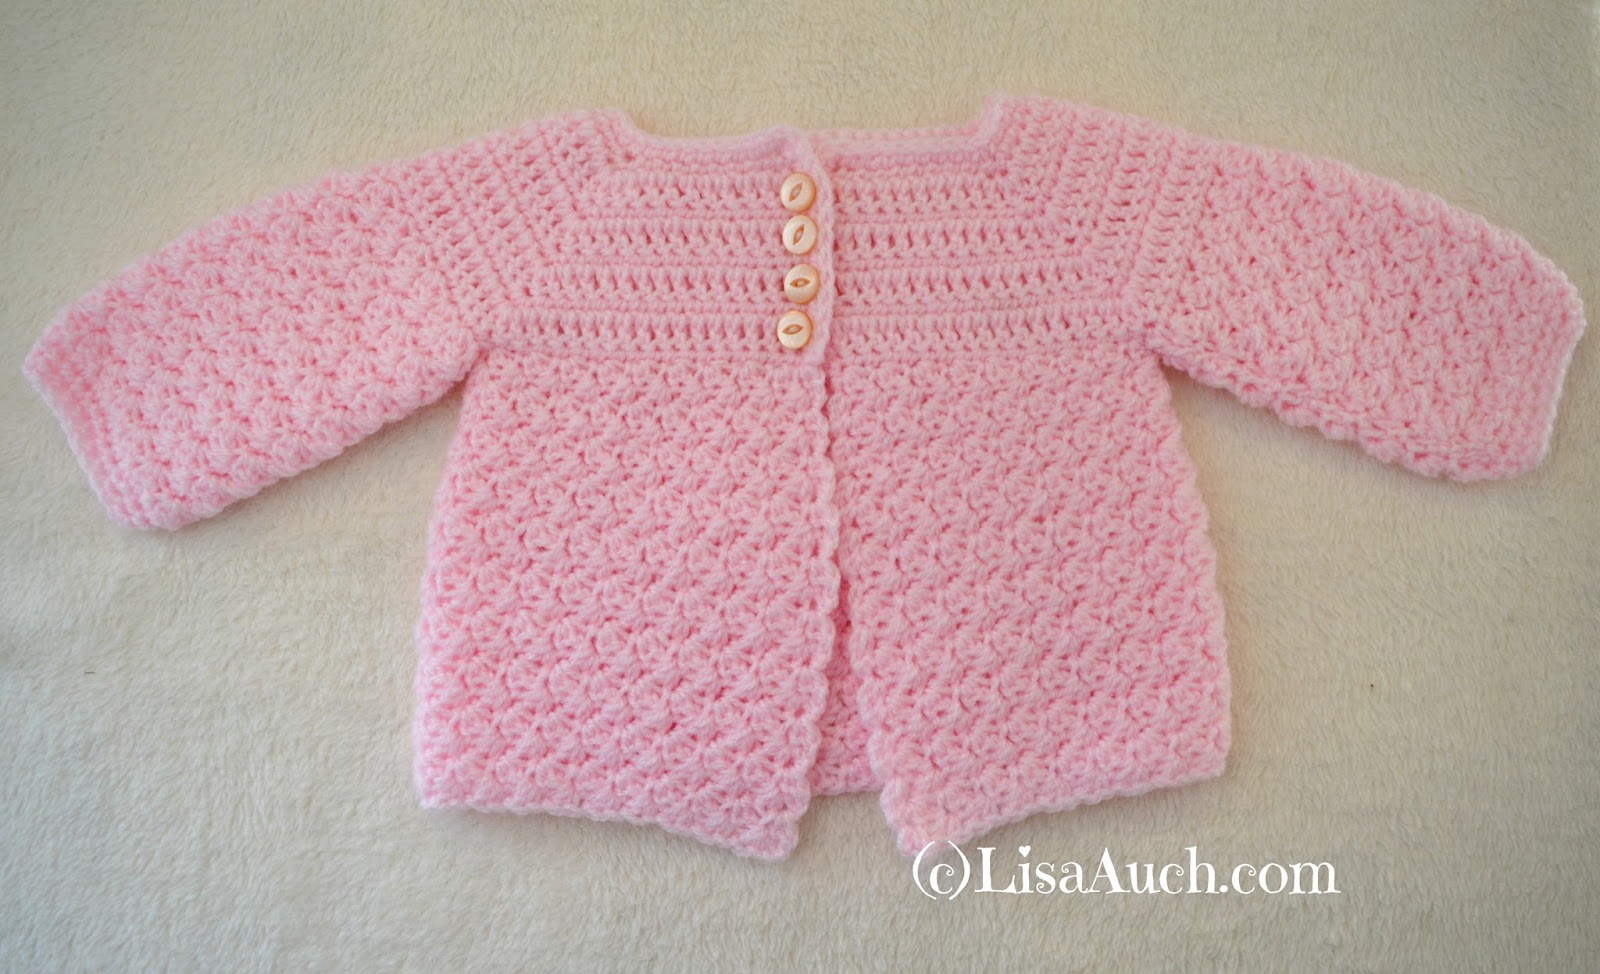 Easy crochet baby sweaters patterns free